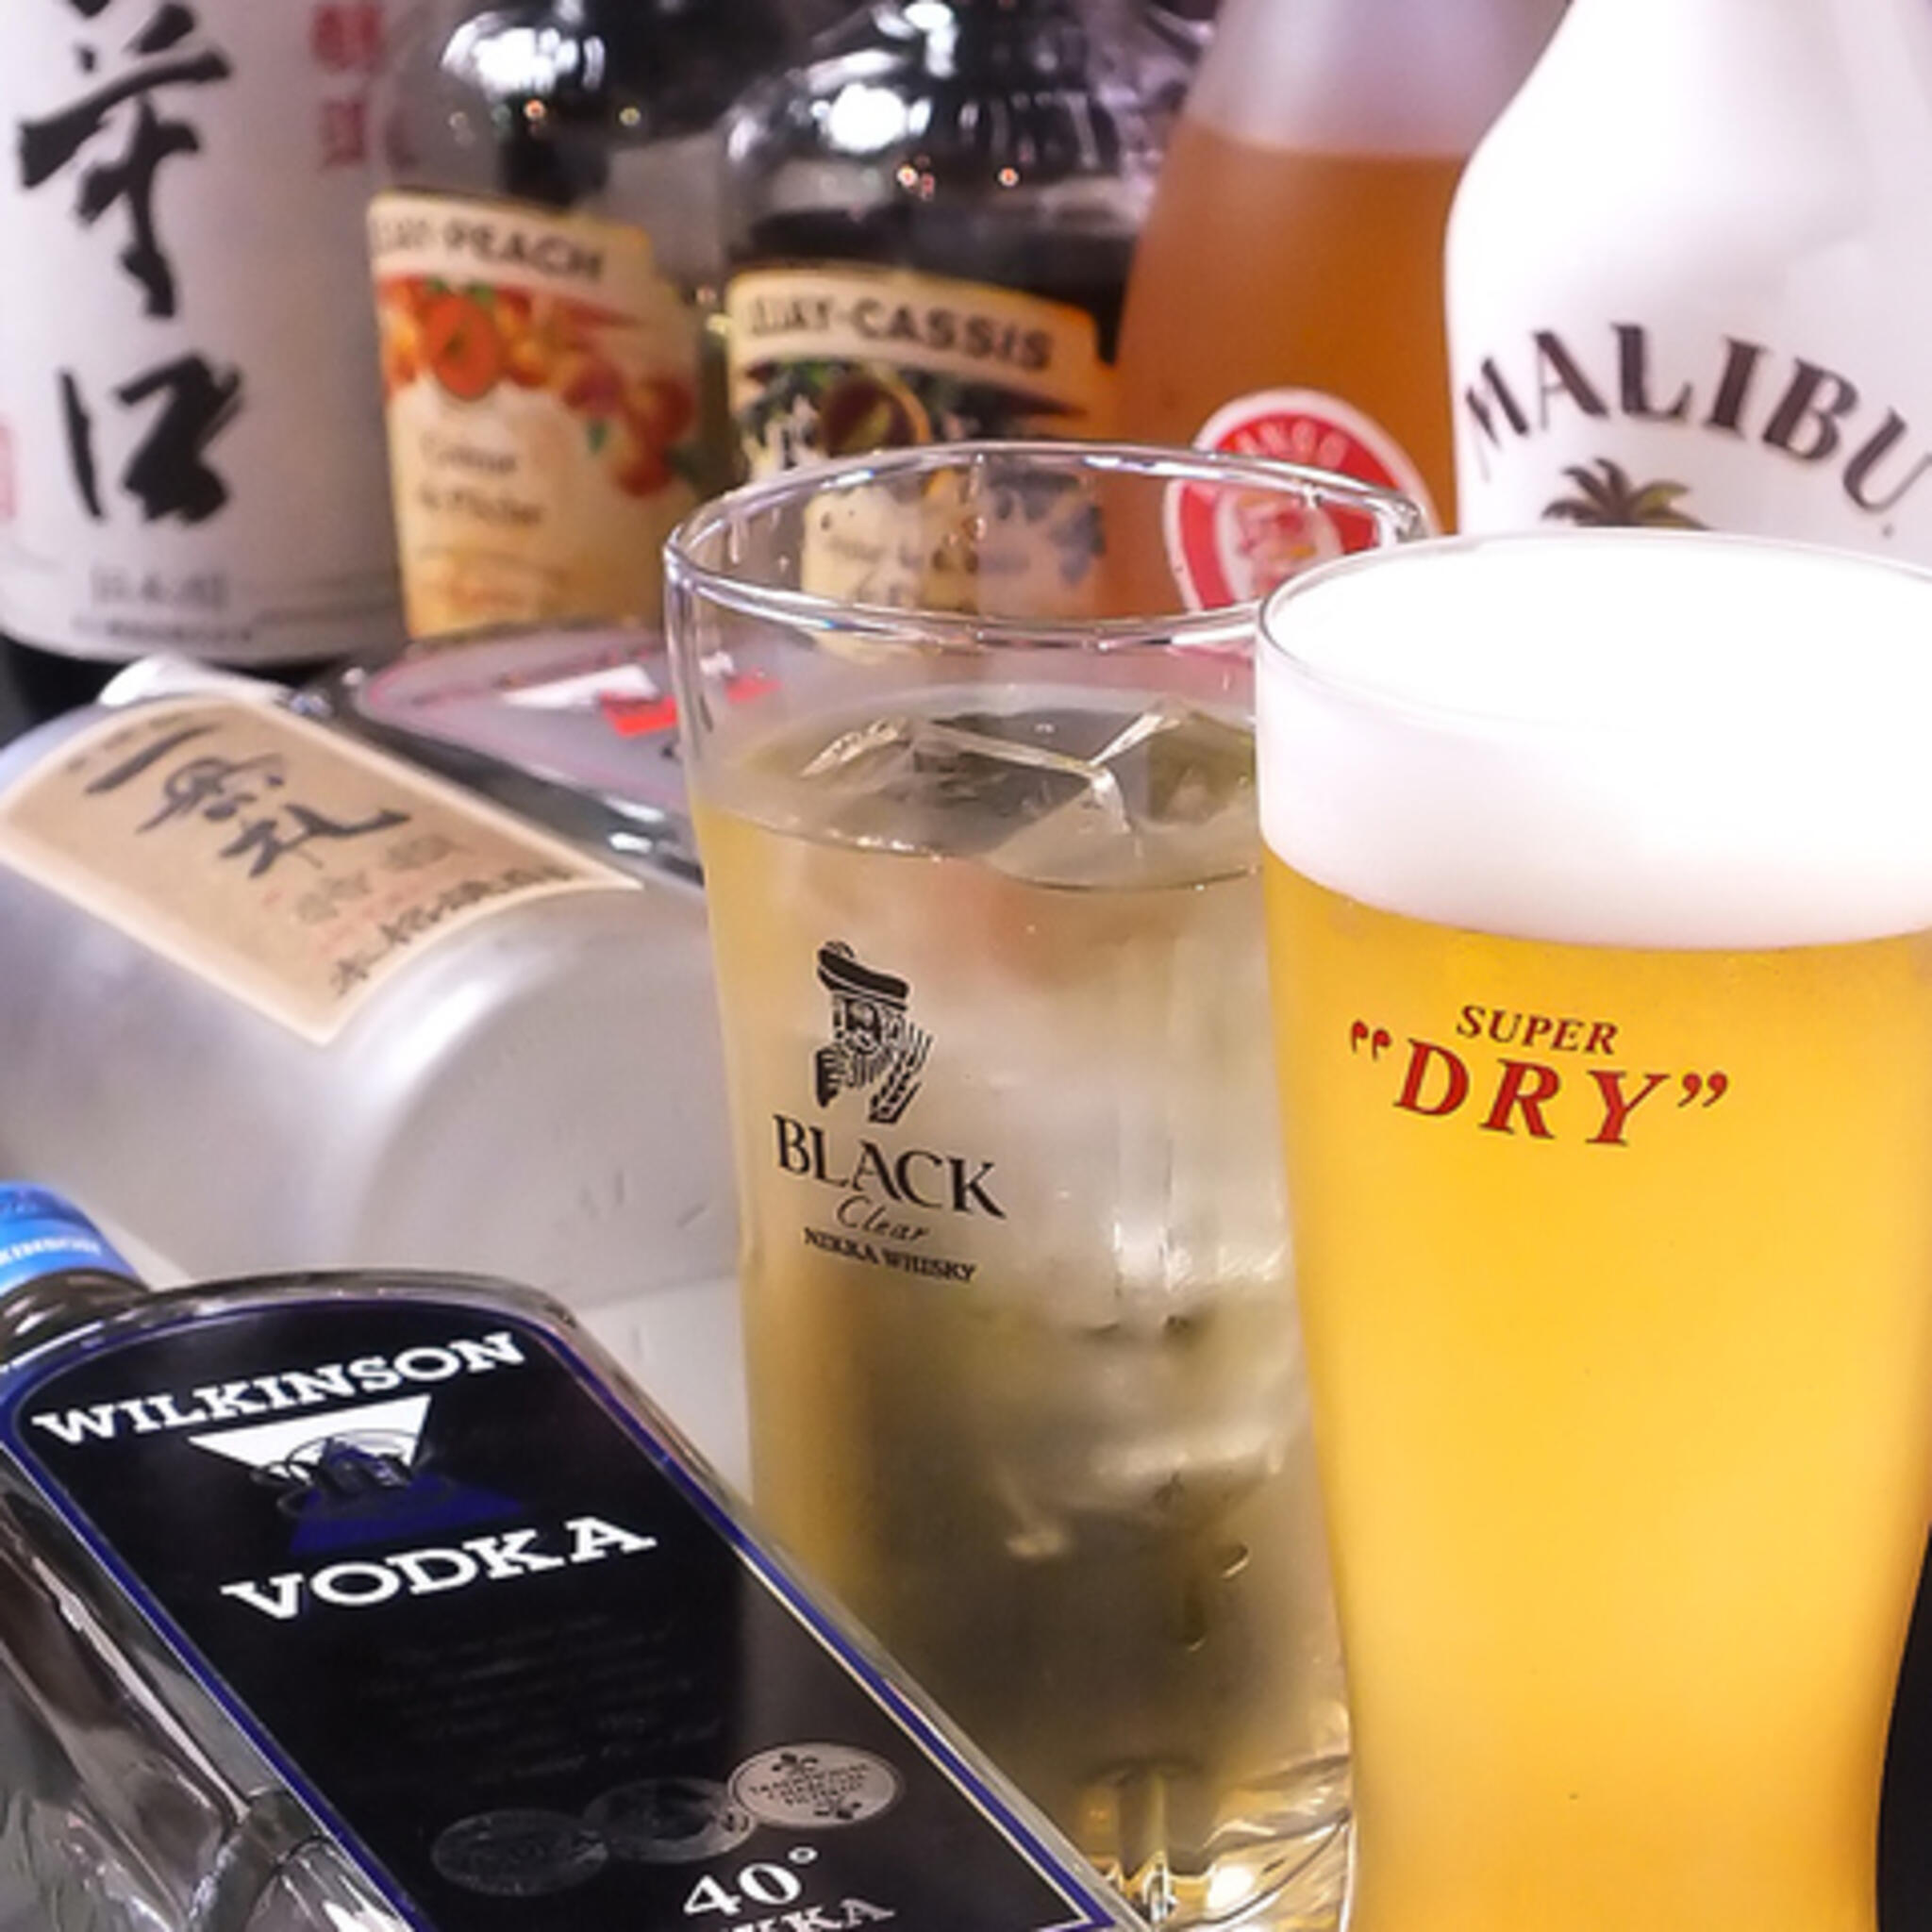 omiso-おみそ- 西京焼きと日本酒のお店の代表写真4